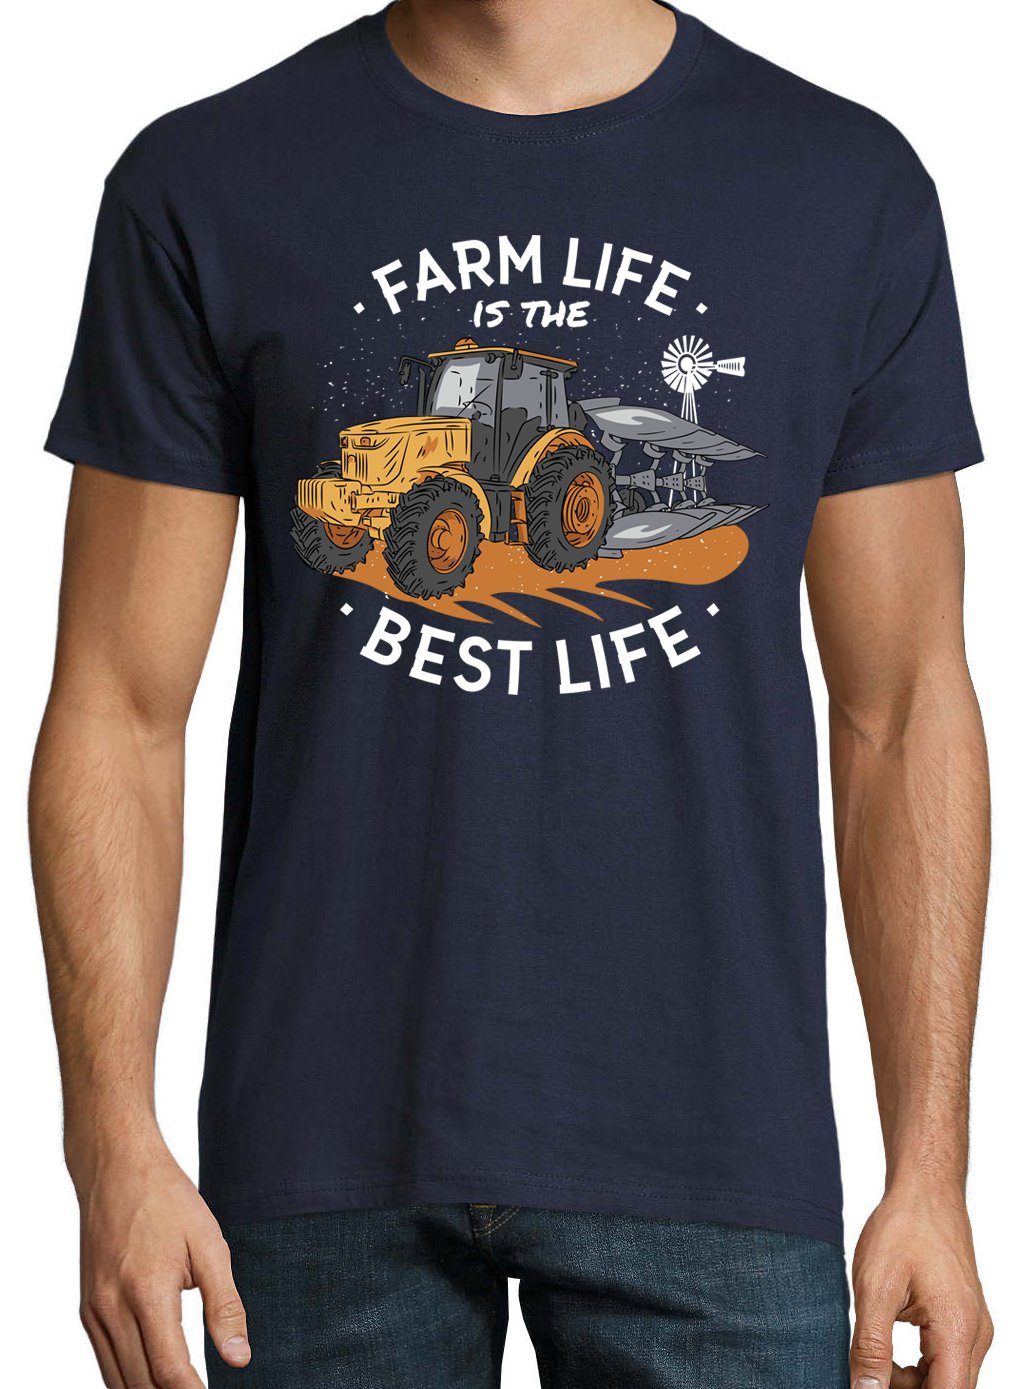 The Life Frontprint Farm Shirt Designz Is lustigem T-Shirt Best Navyblau Herren mit Youth